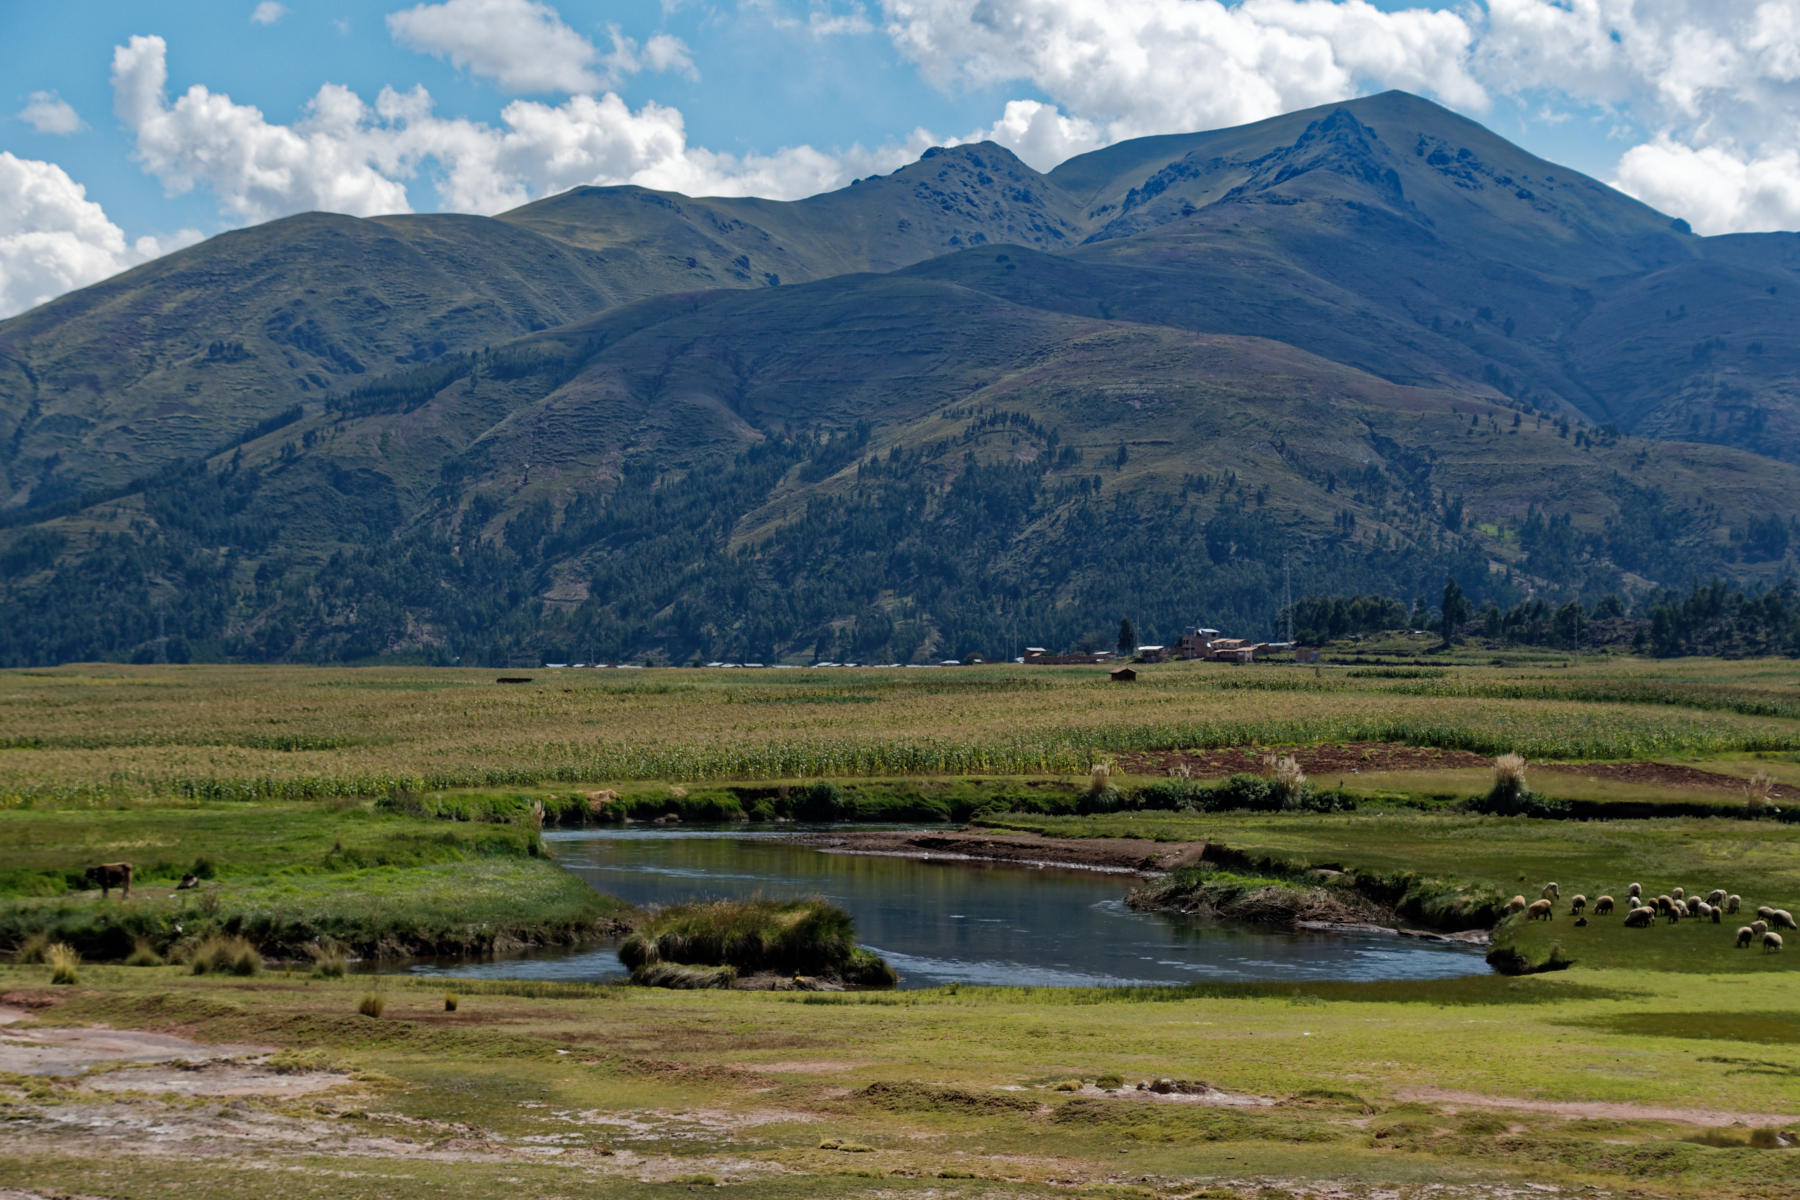 Landscape seen on the Titicaca Train